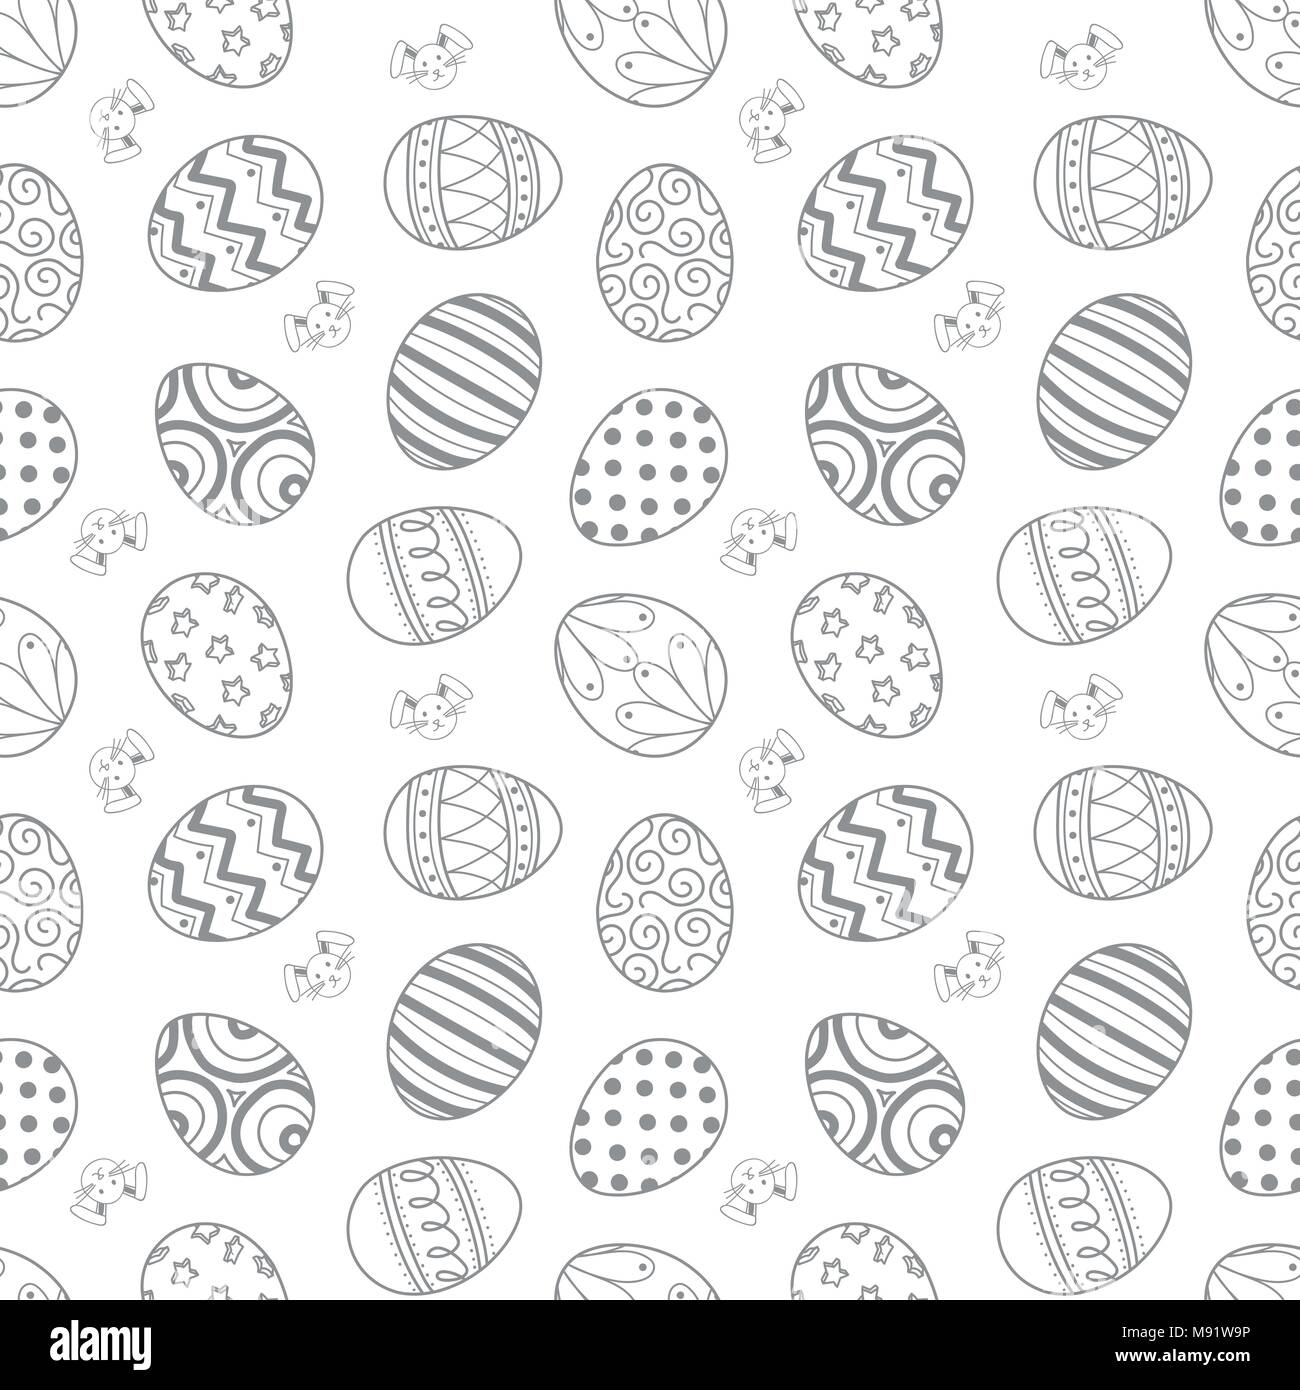 Easter eggs in light gray outline and bunny random on white background. Cute hand drawn seamless pattern design for Easter festival in vector illustra Stock Vector